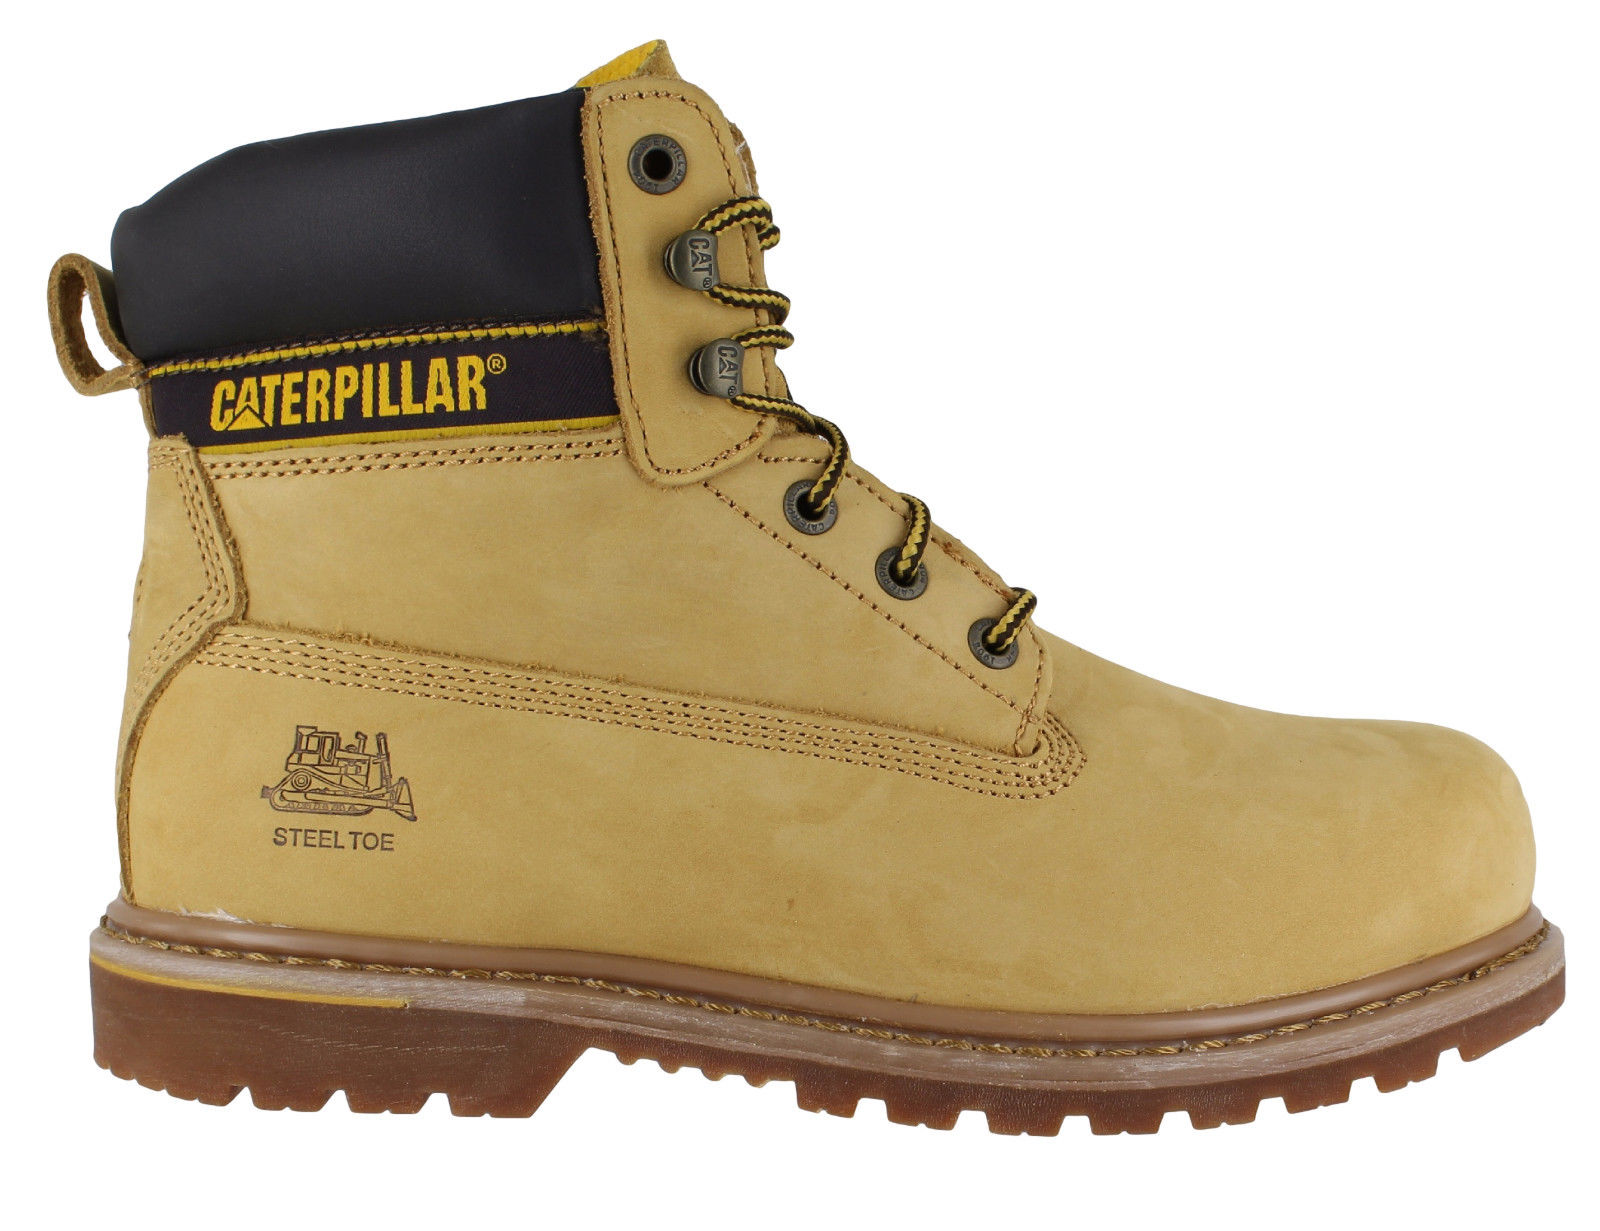 caterpillar boots yellow